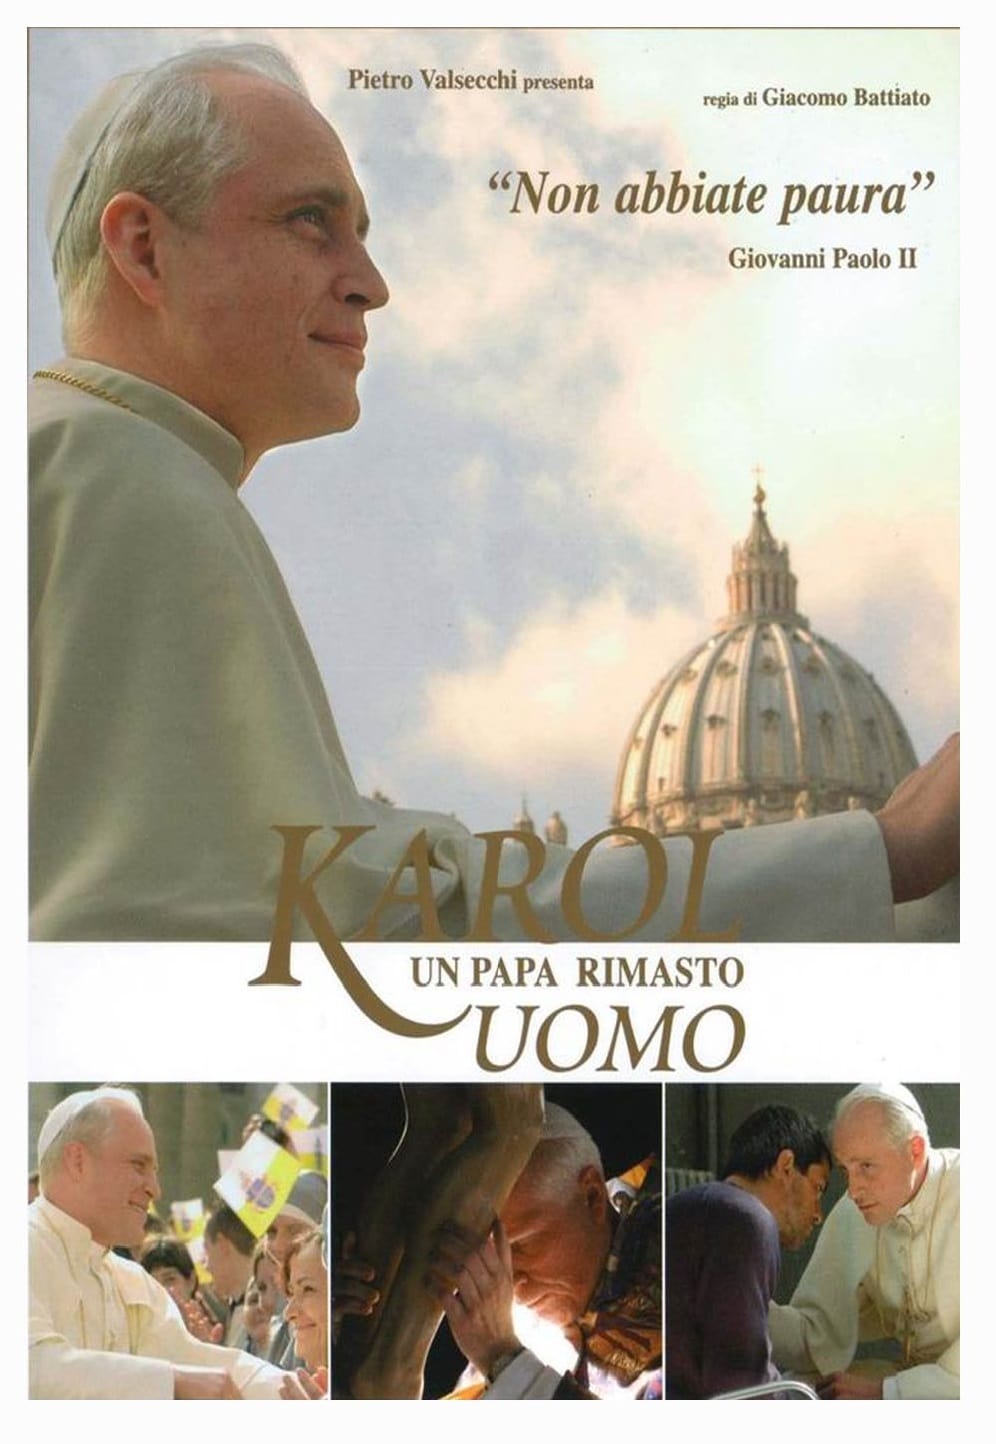 Karol: The Pope, The Man (2006)